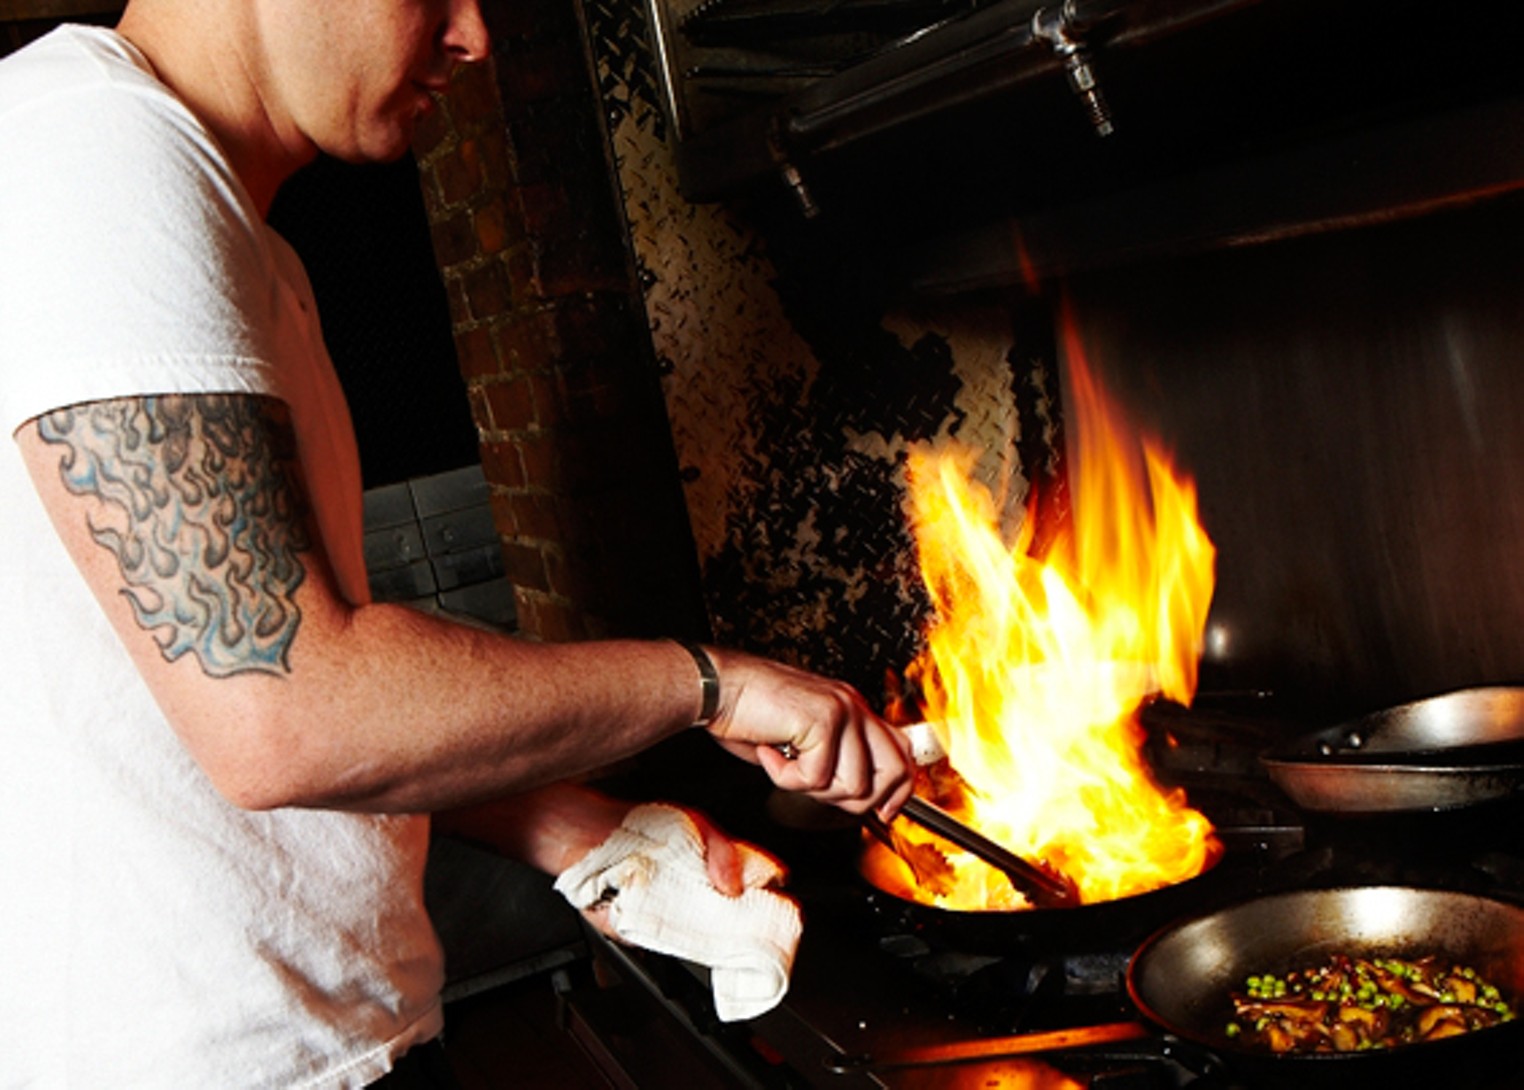 Toronto chef tattoos get the spotlight on Instagram